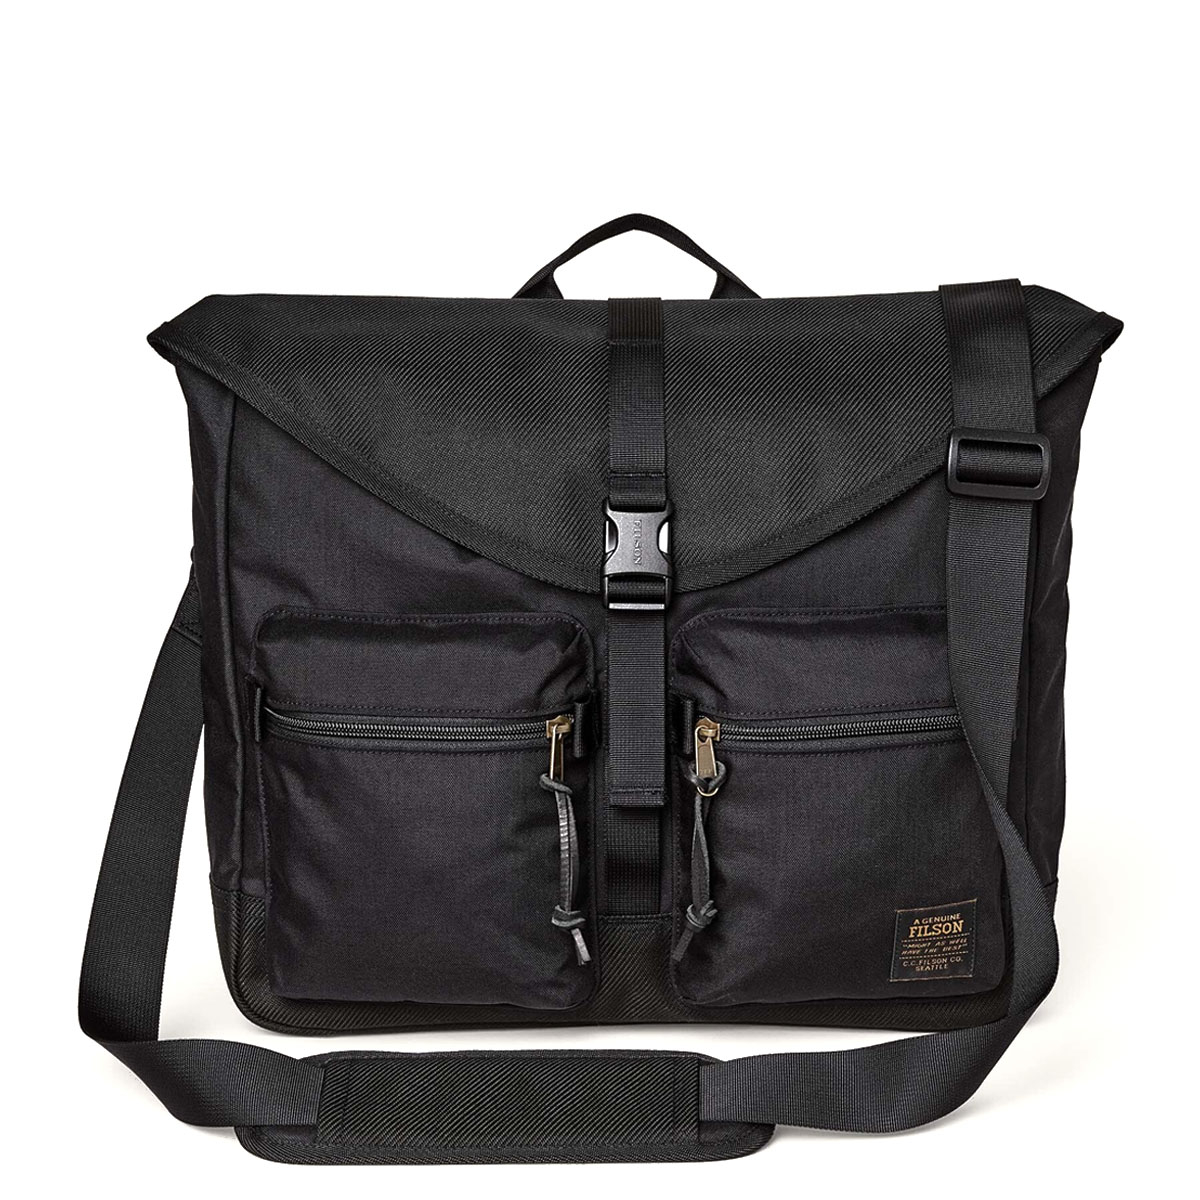 Filson Surveyor Messenger Bag Black, Full-featured and made from tough Cordura® nylon